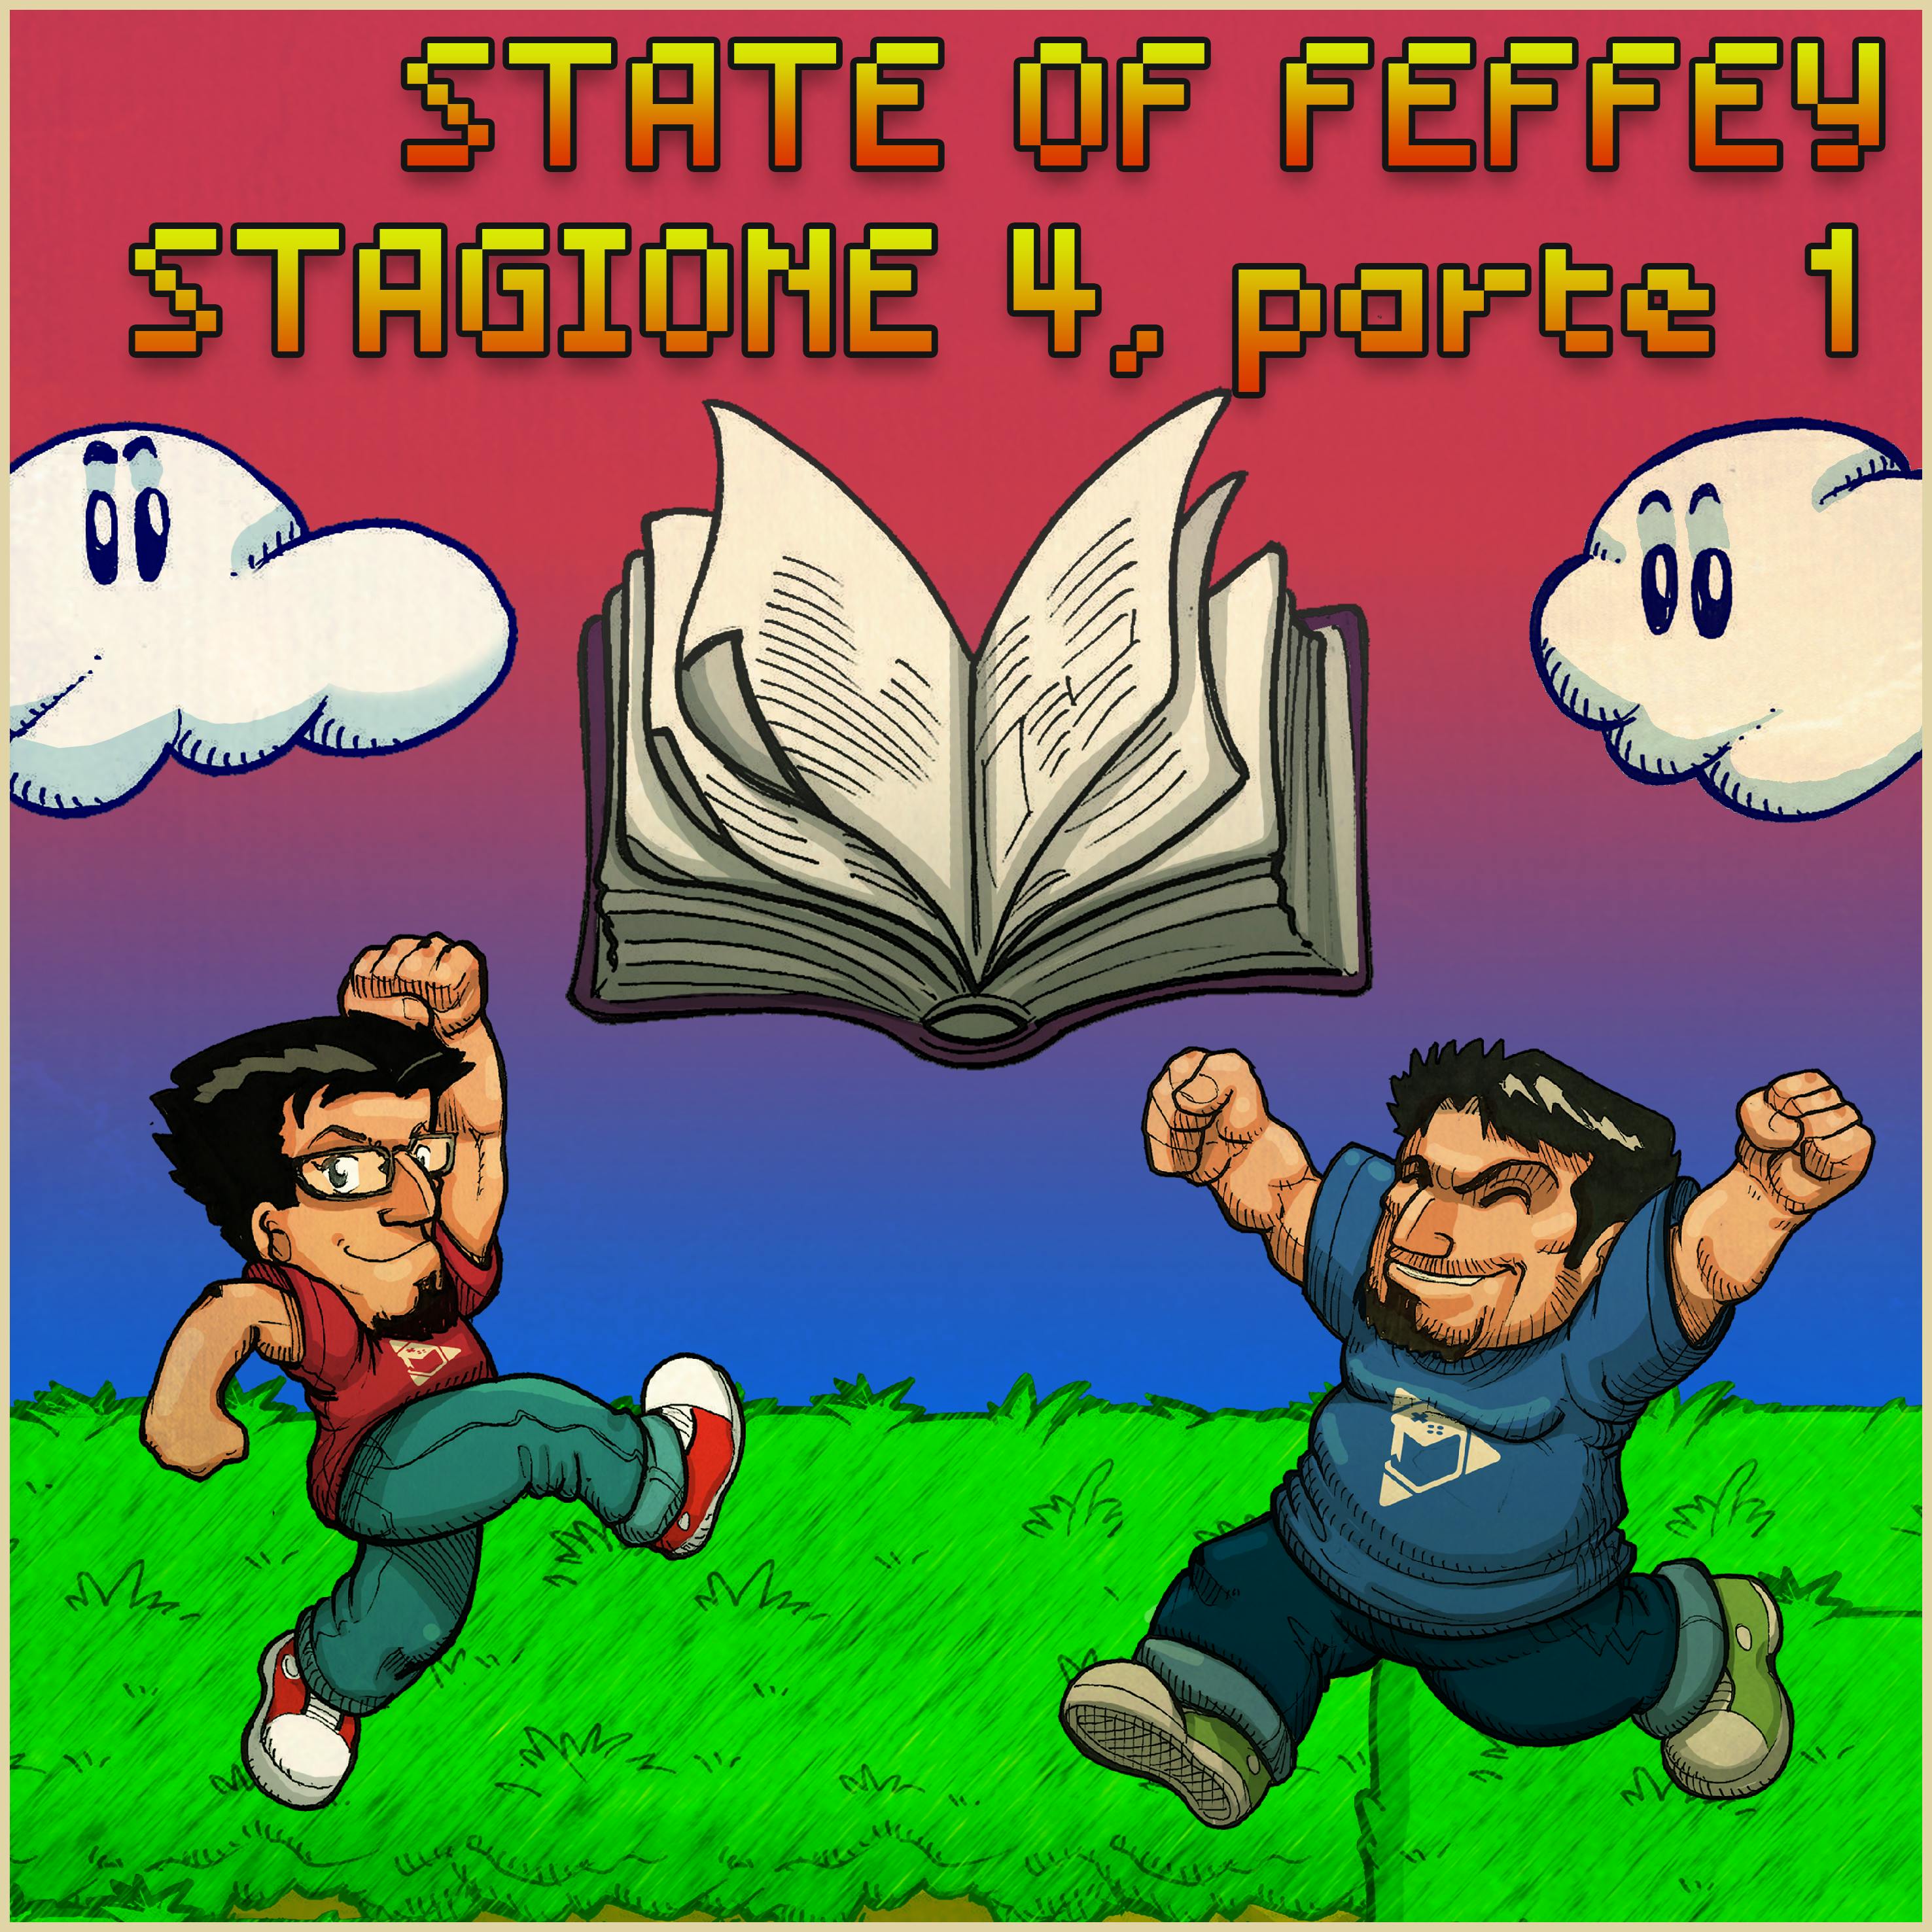 State of Feffey: Stagione 4, parte 1